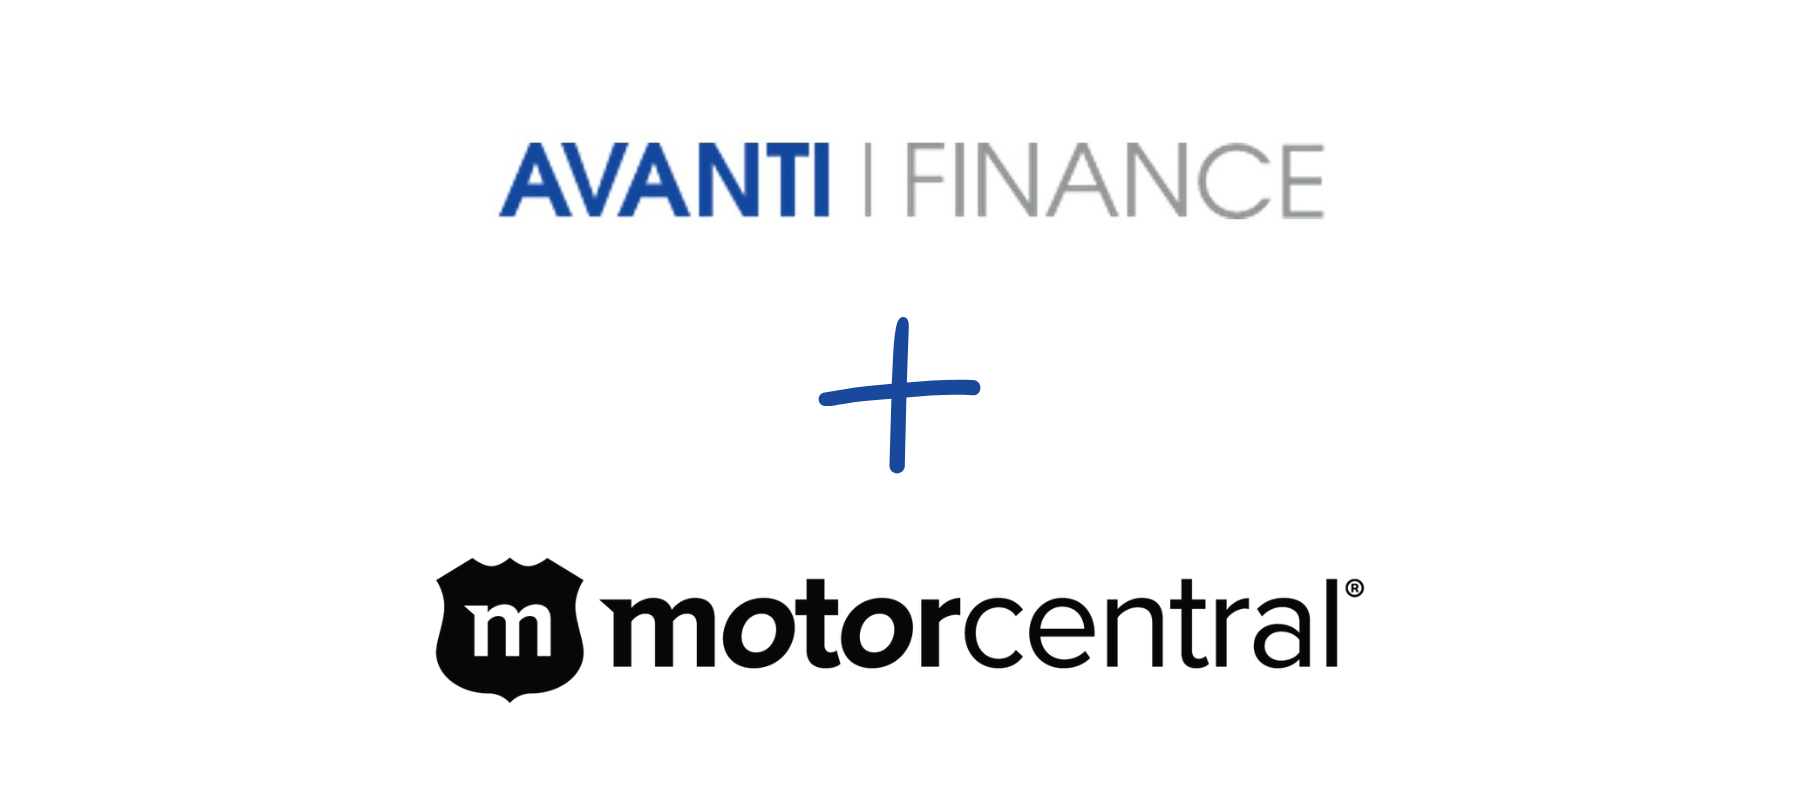 avanti finance and motorcentral limelight merge